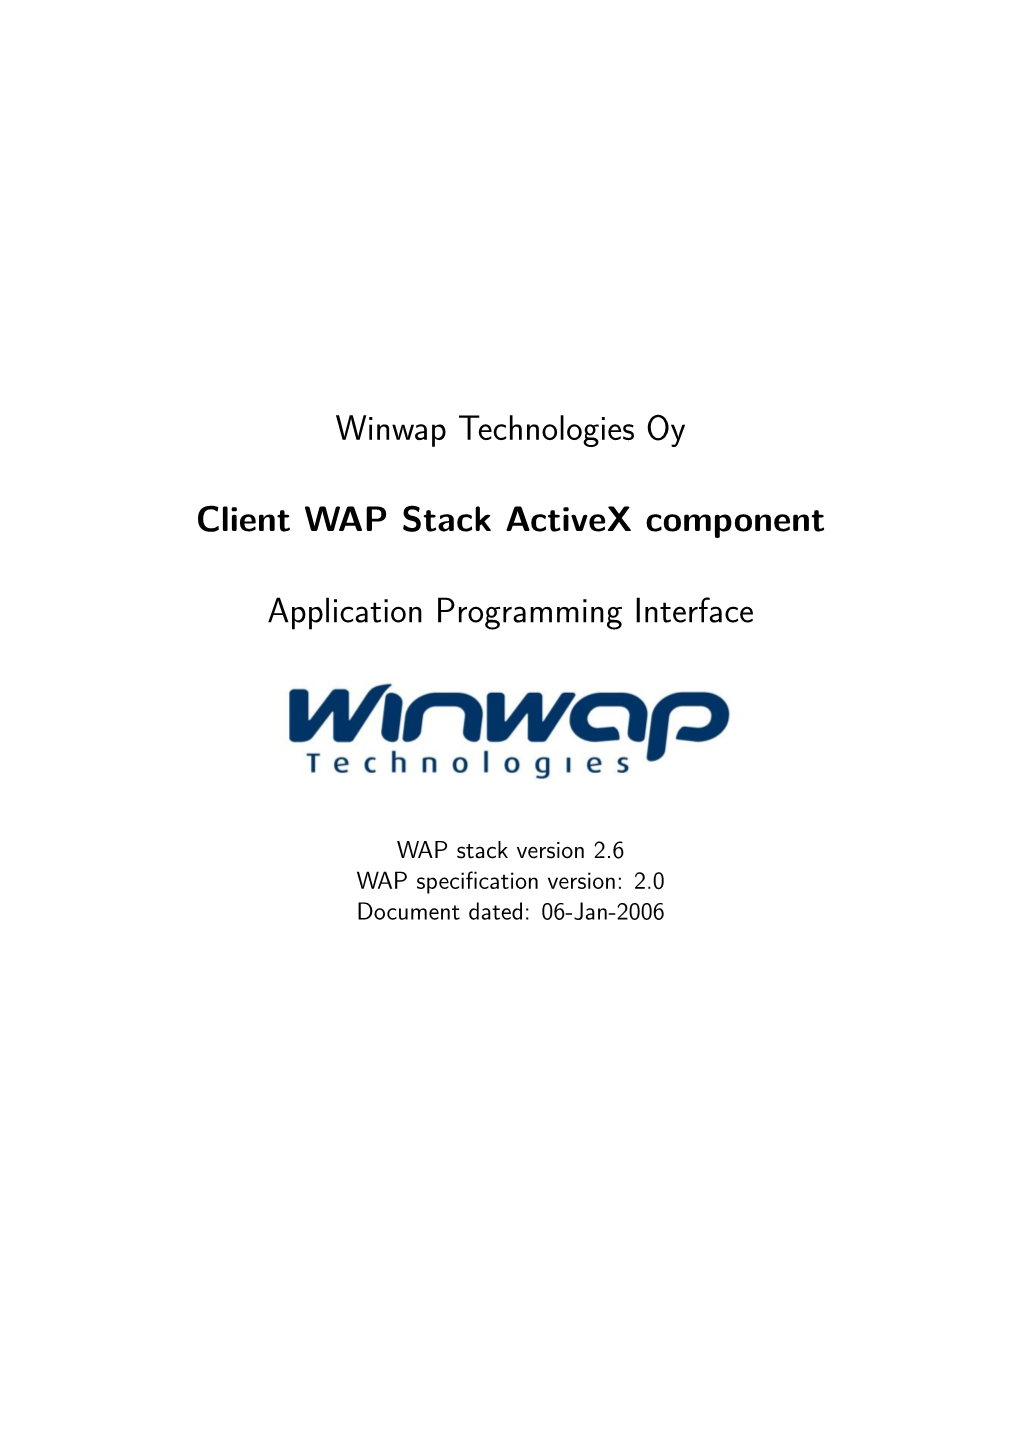 Client WAP Stack Activex Component